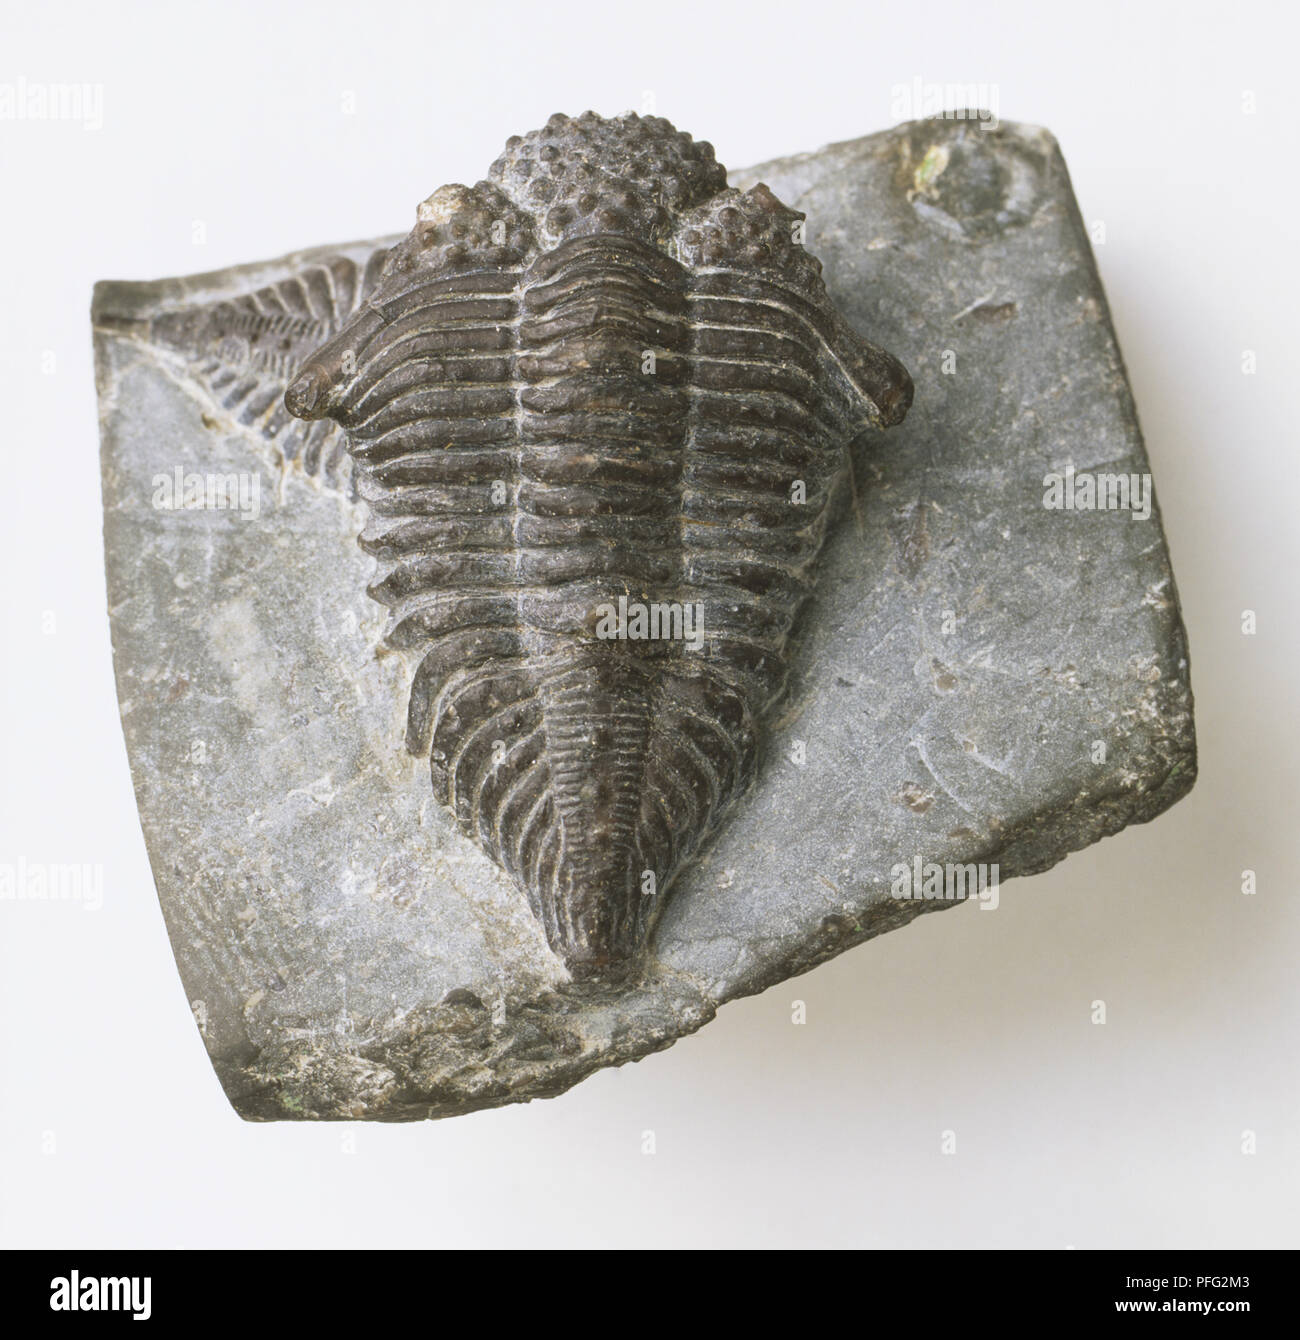 Encrinurus sp., Trilobite, fossil in light grey limestone. Stock Photo